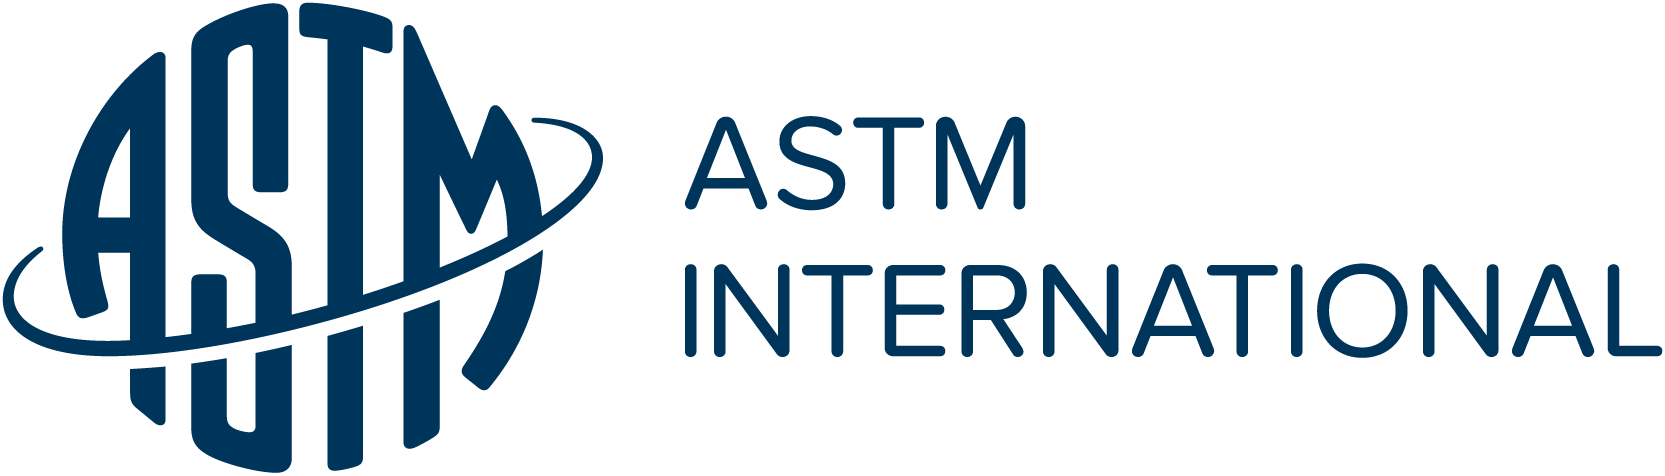 ASTM International logo